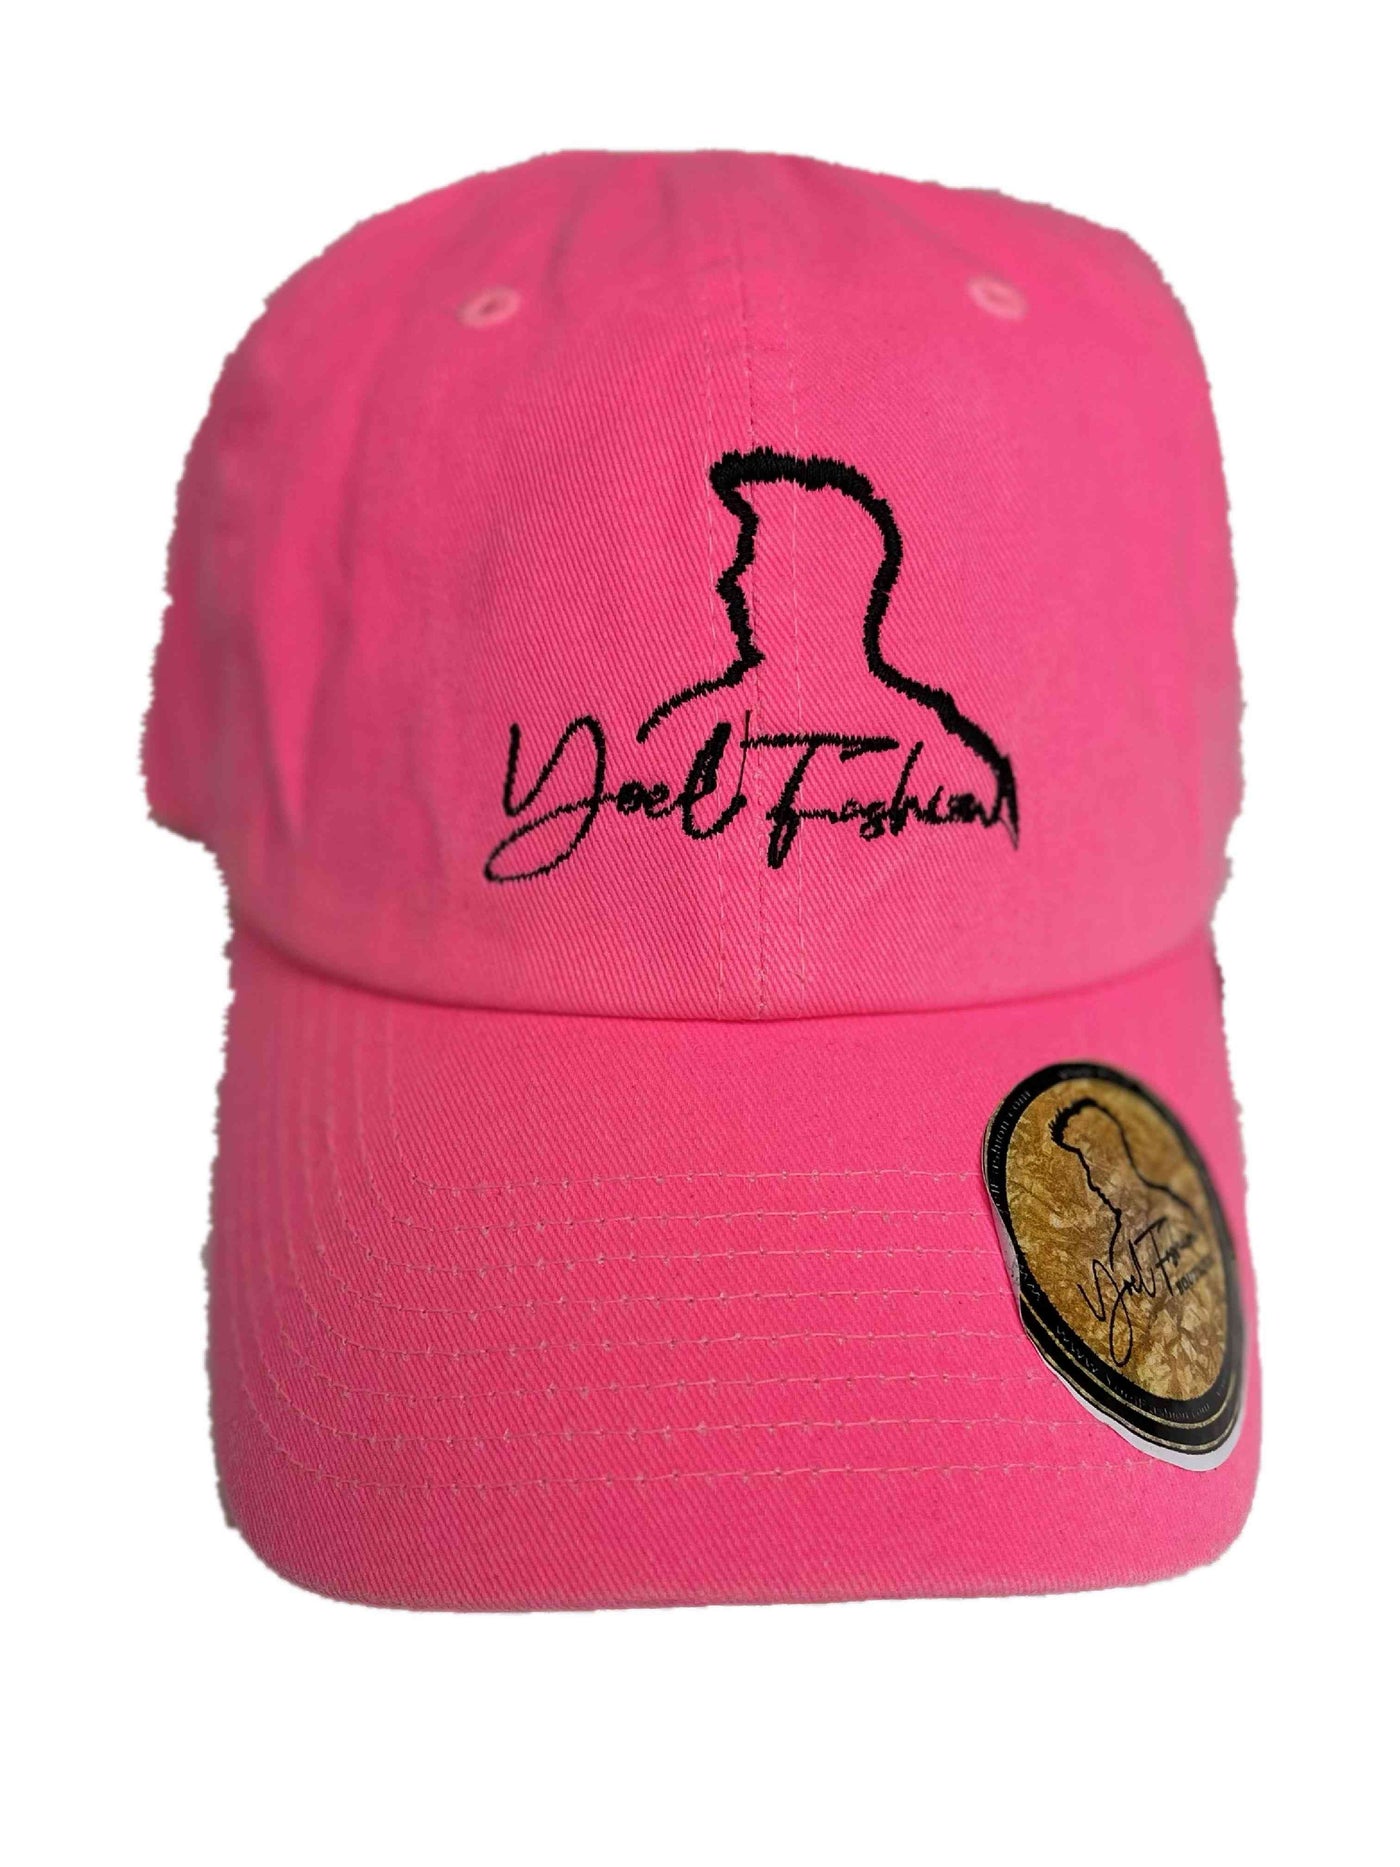 Yoel Fashion New Logo Hats